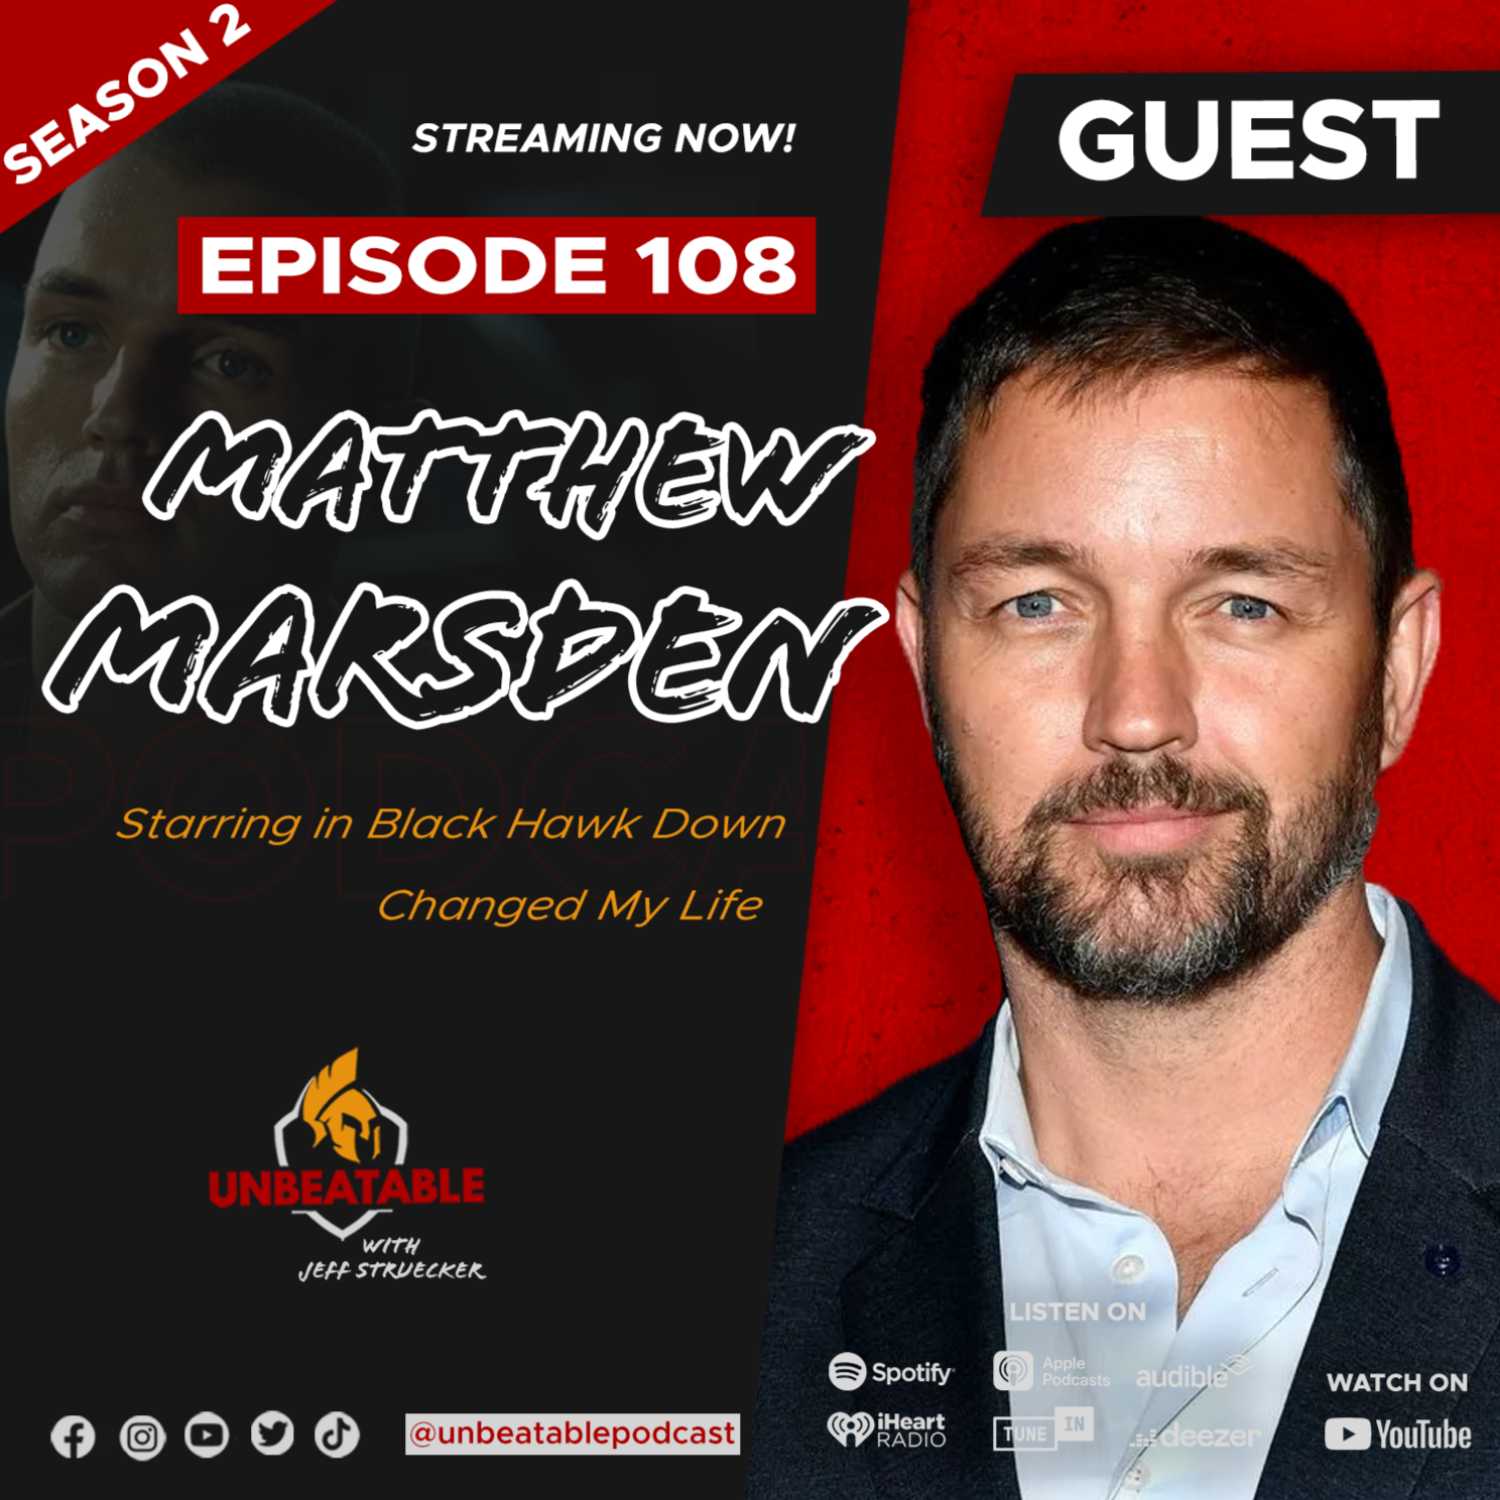 Ep. 108: (Part 5) Starring in Black Hawk Down Changed My Life - Matthew Marsden